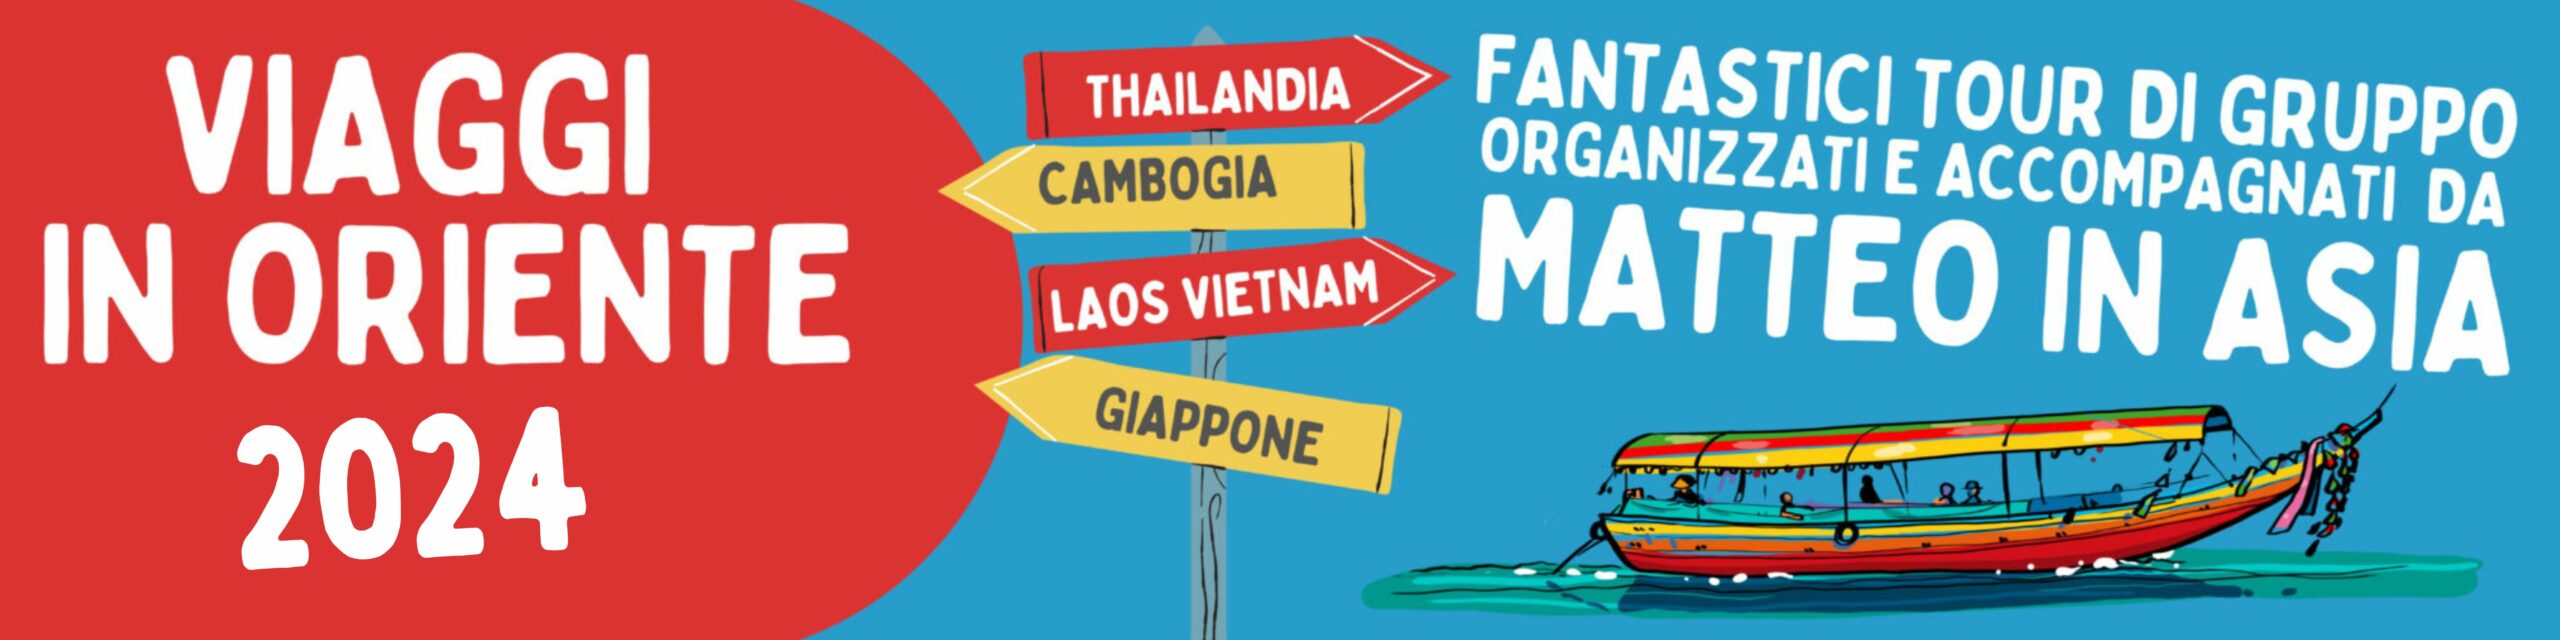 viaggi organizzati Thailandia offerte